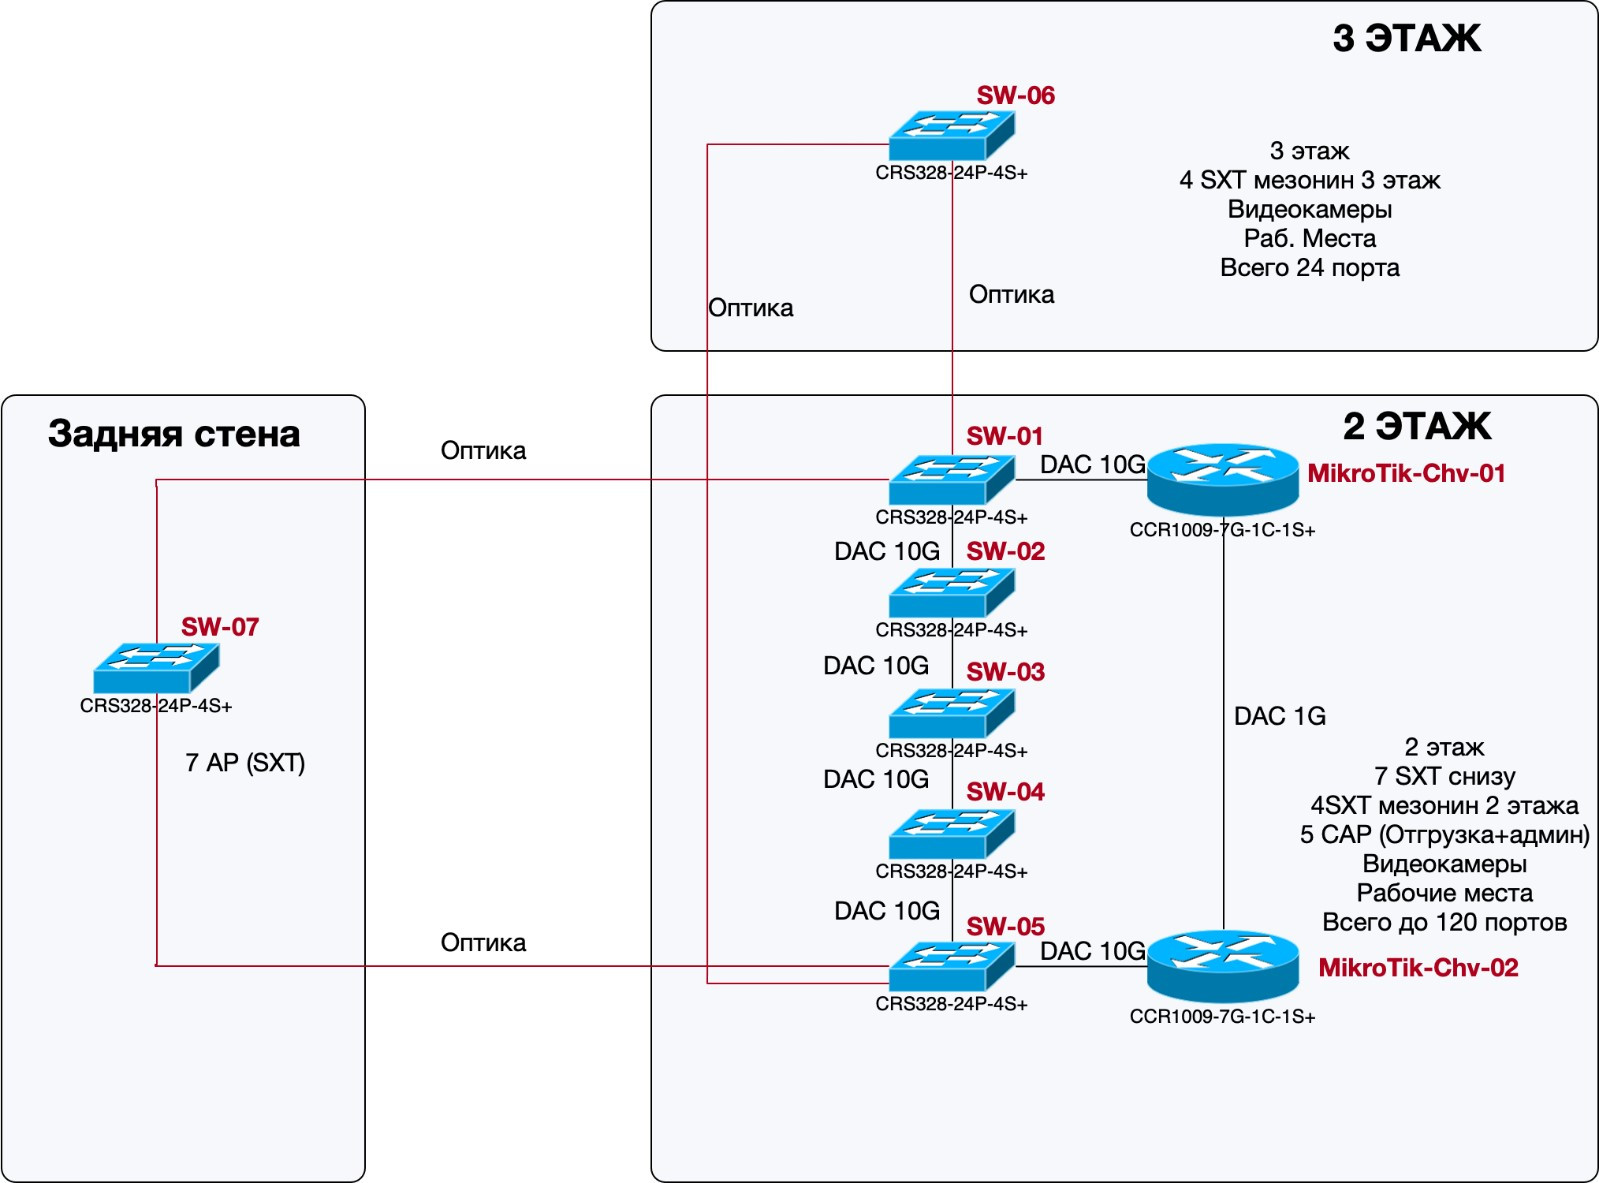 Схема сетевой архитектуры 